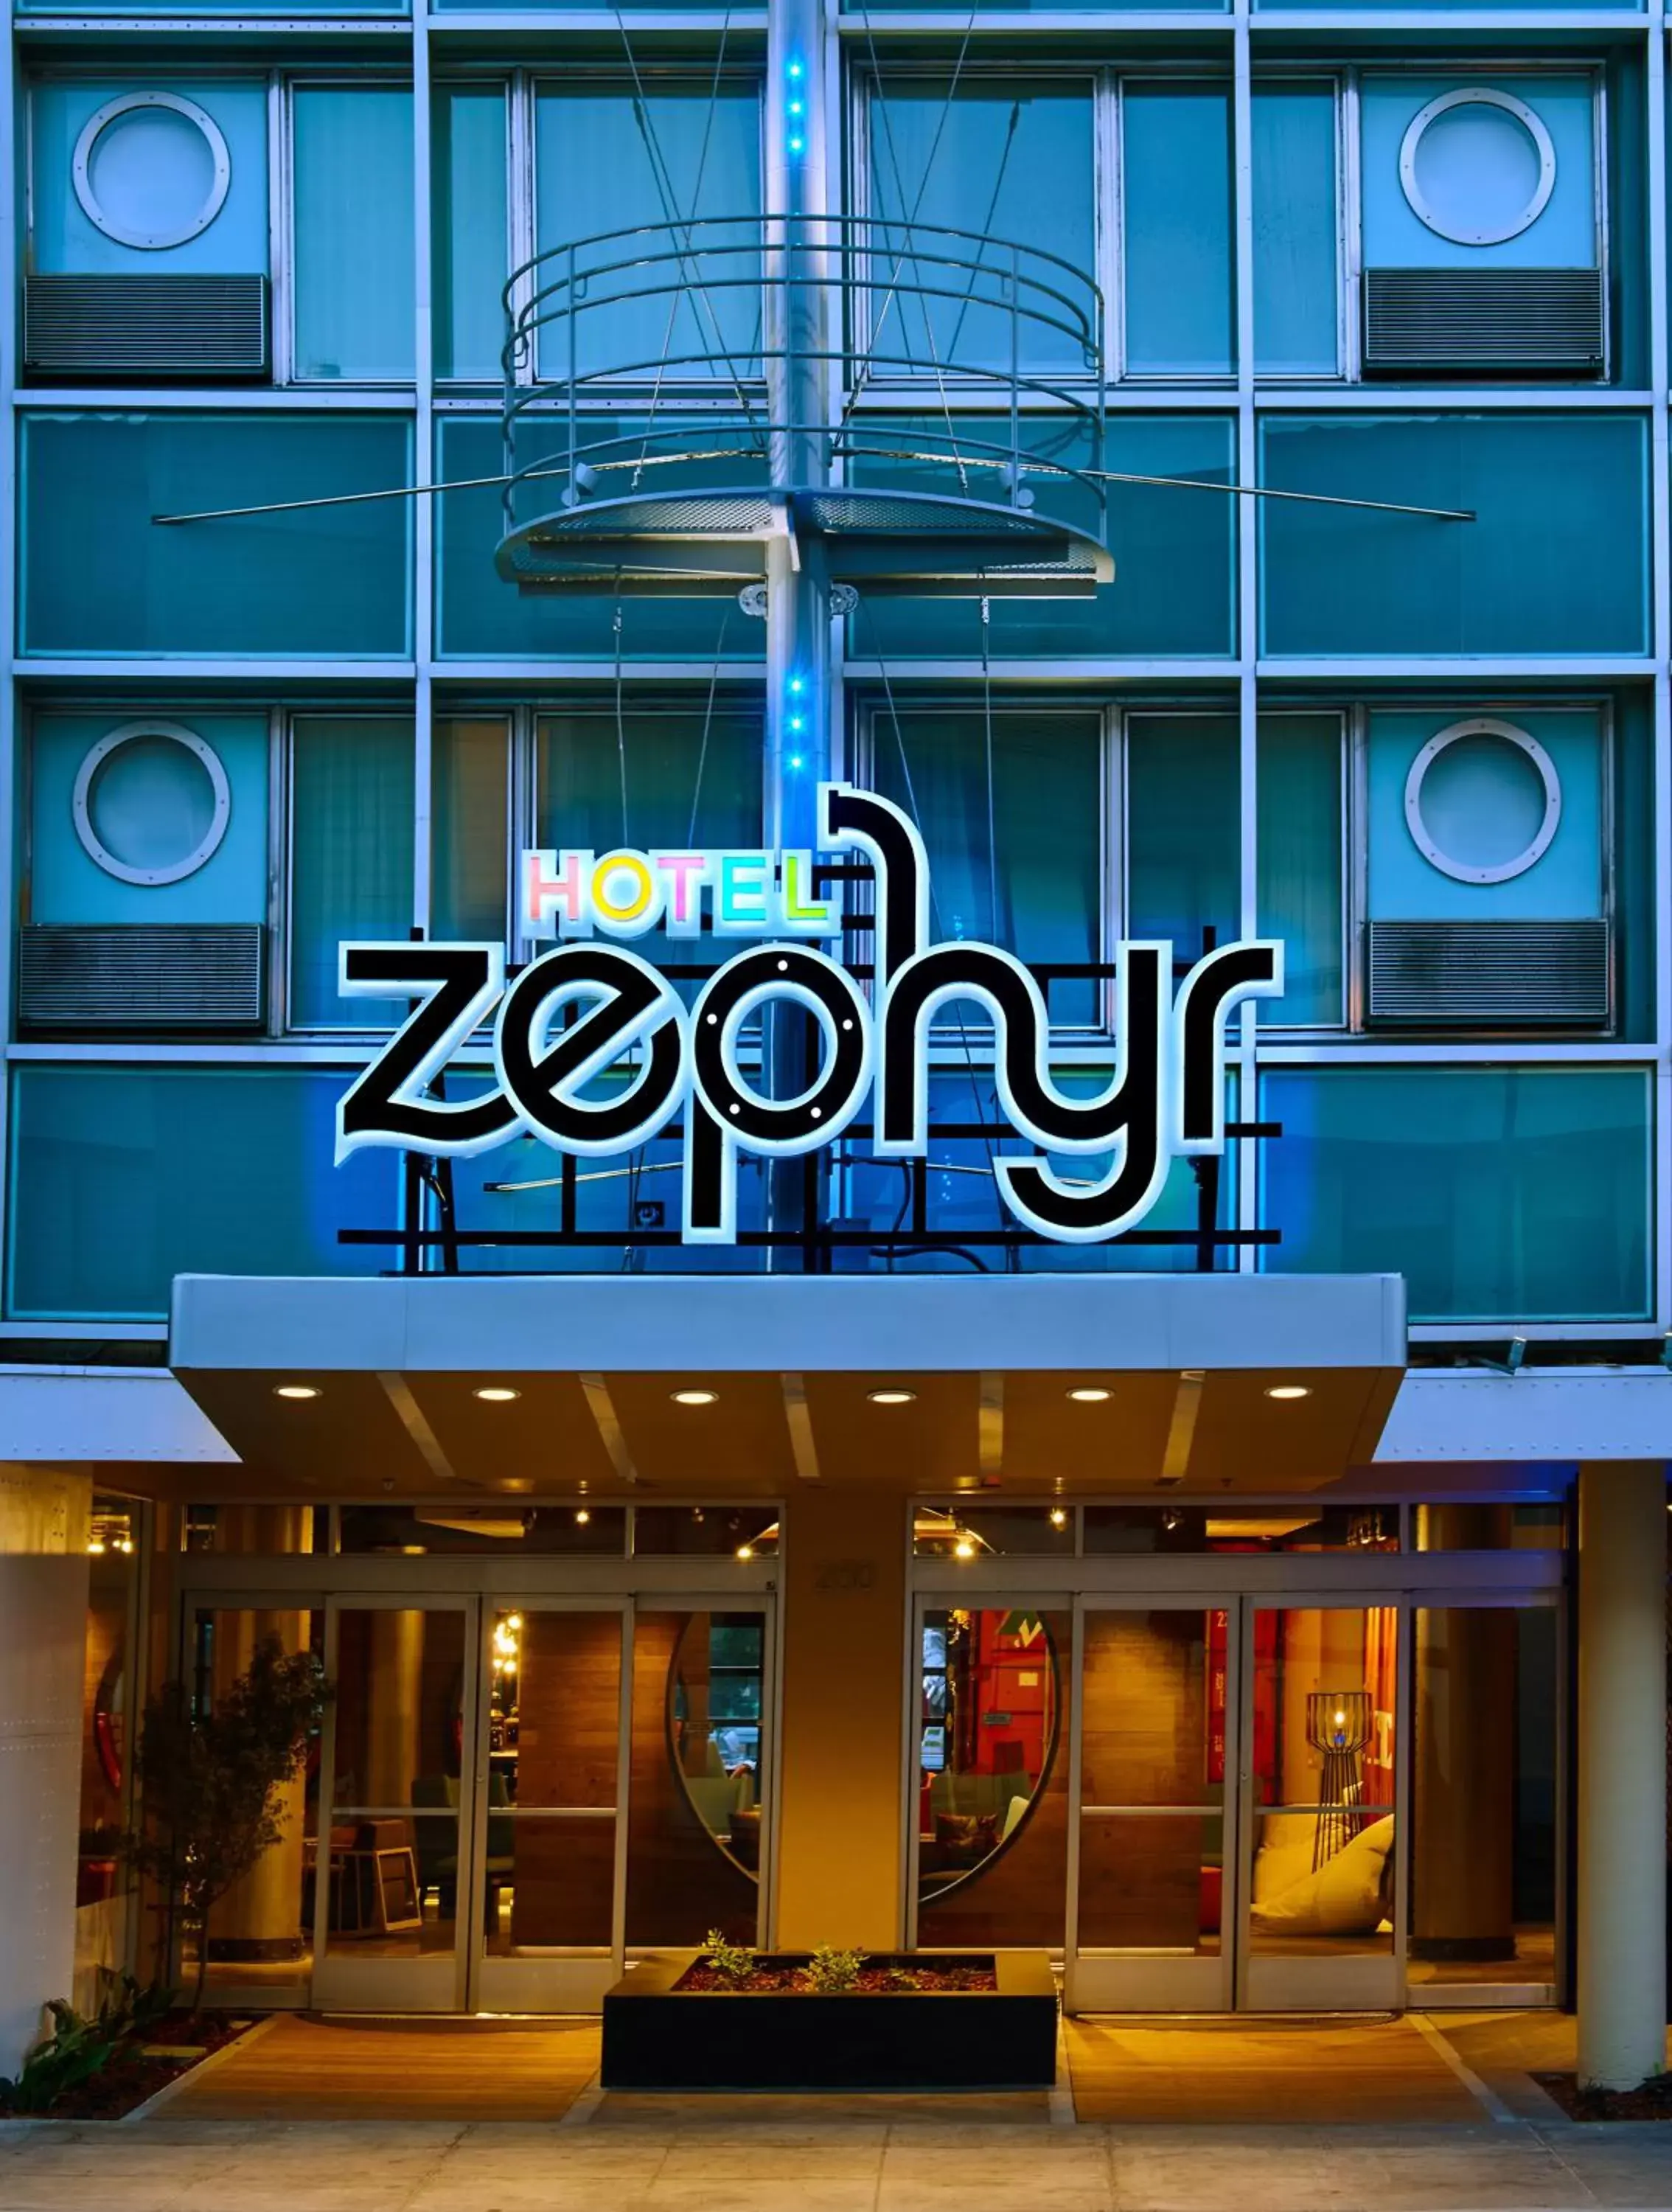 Facade/entrance in Hotel Zephyr San Francisco